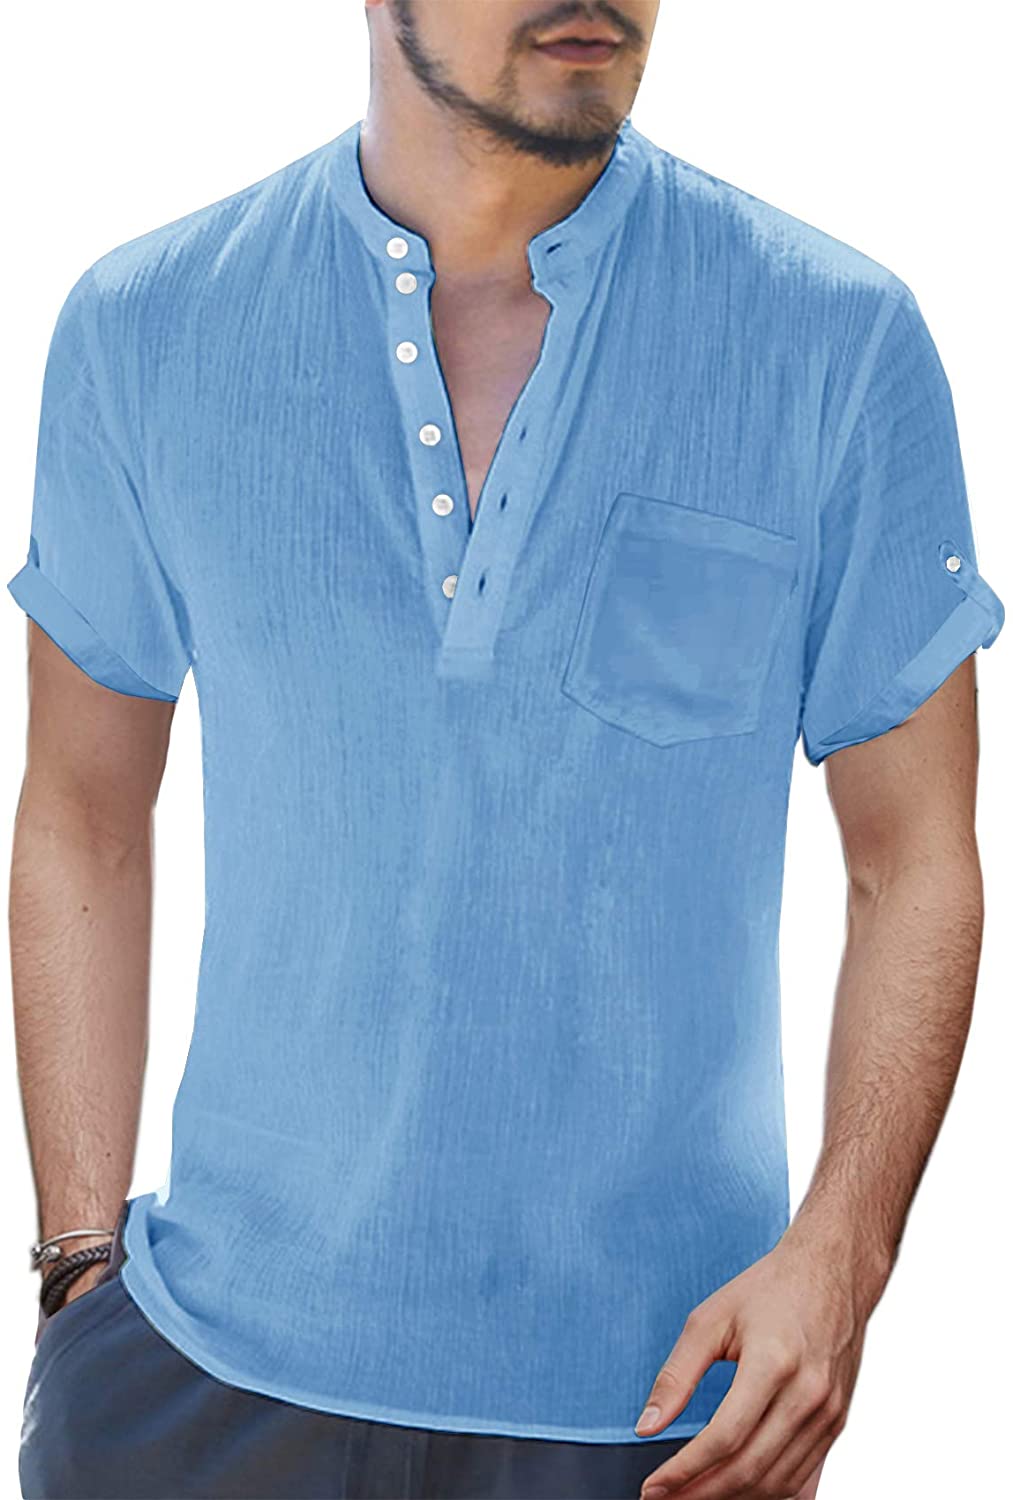 Mens Long Sleeve Henley Shirt Cotton Linen Beach Yoga Loose Fit Henleys Tops Baggy Casual Hippie V Neck T Shirts 